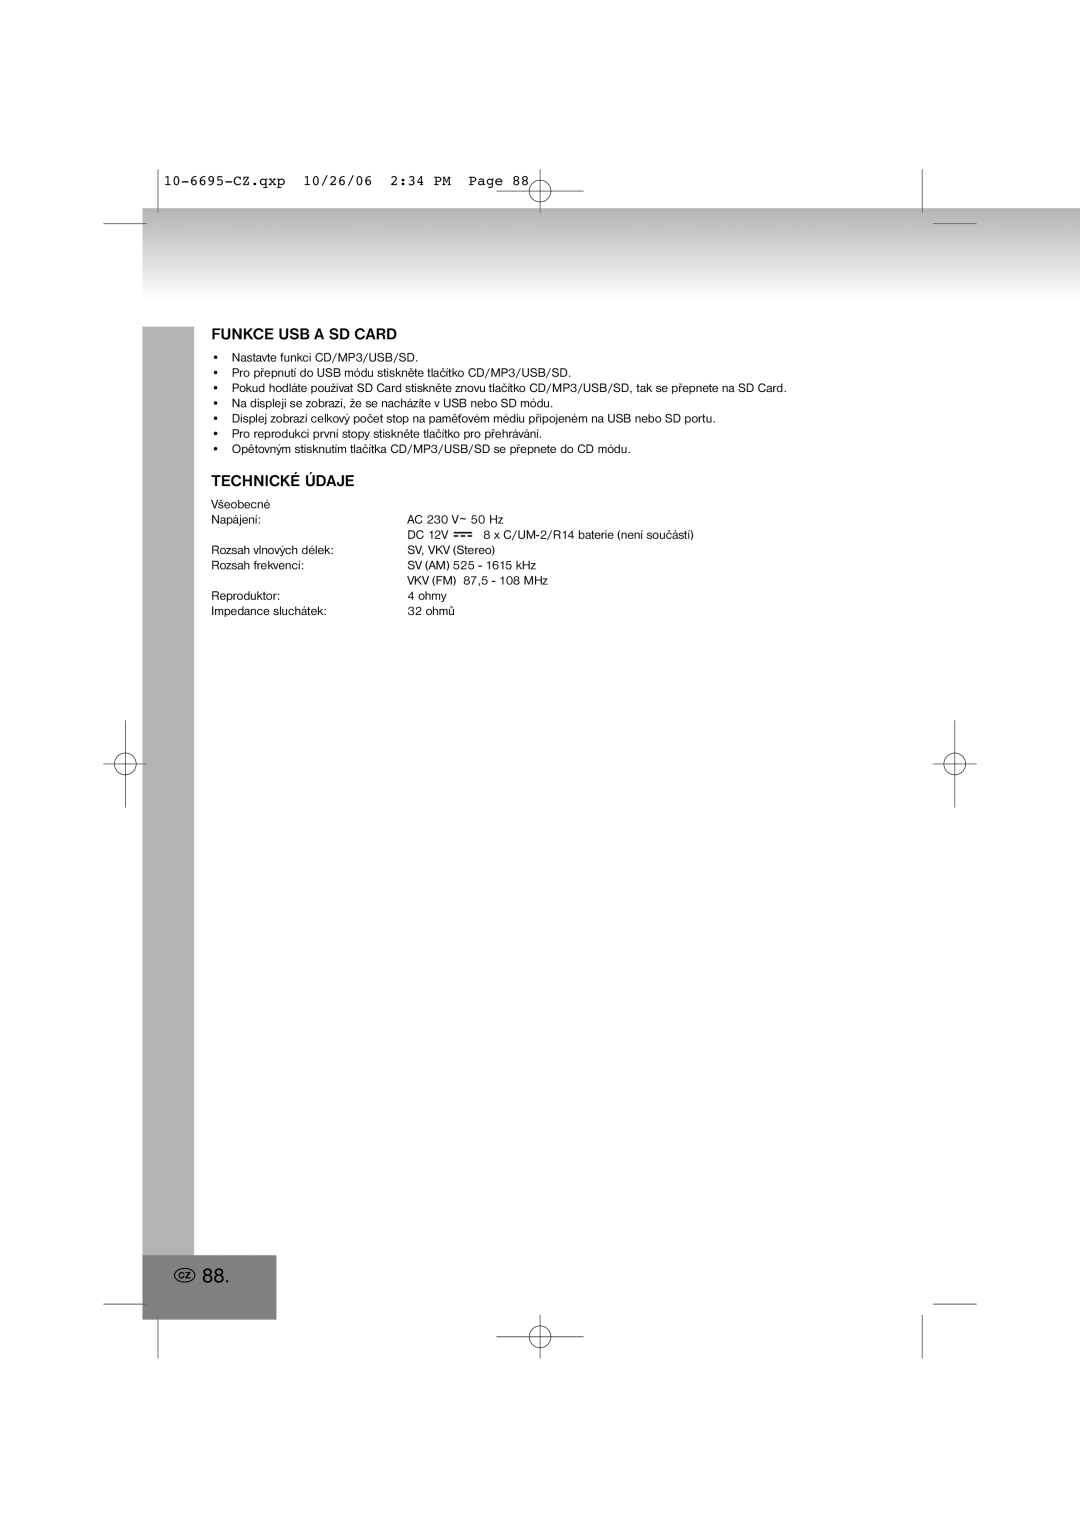 Elta manual Funkce Usb A Sd Card, Technické Údaje, 10-6695-CZ.qxp10/26/06 2 34 PM Page 